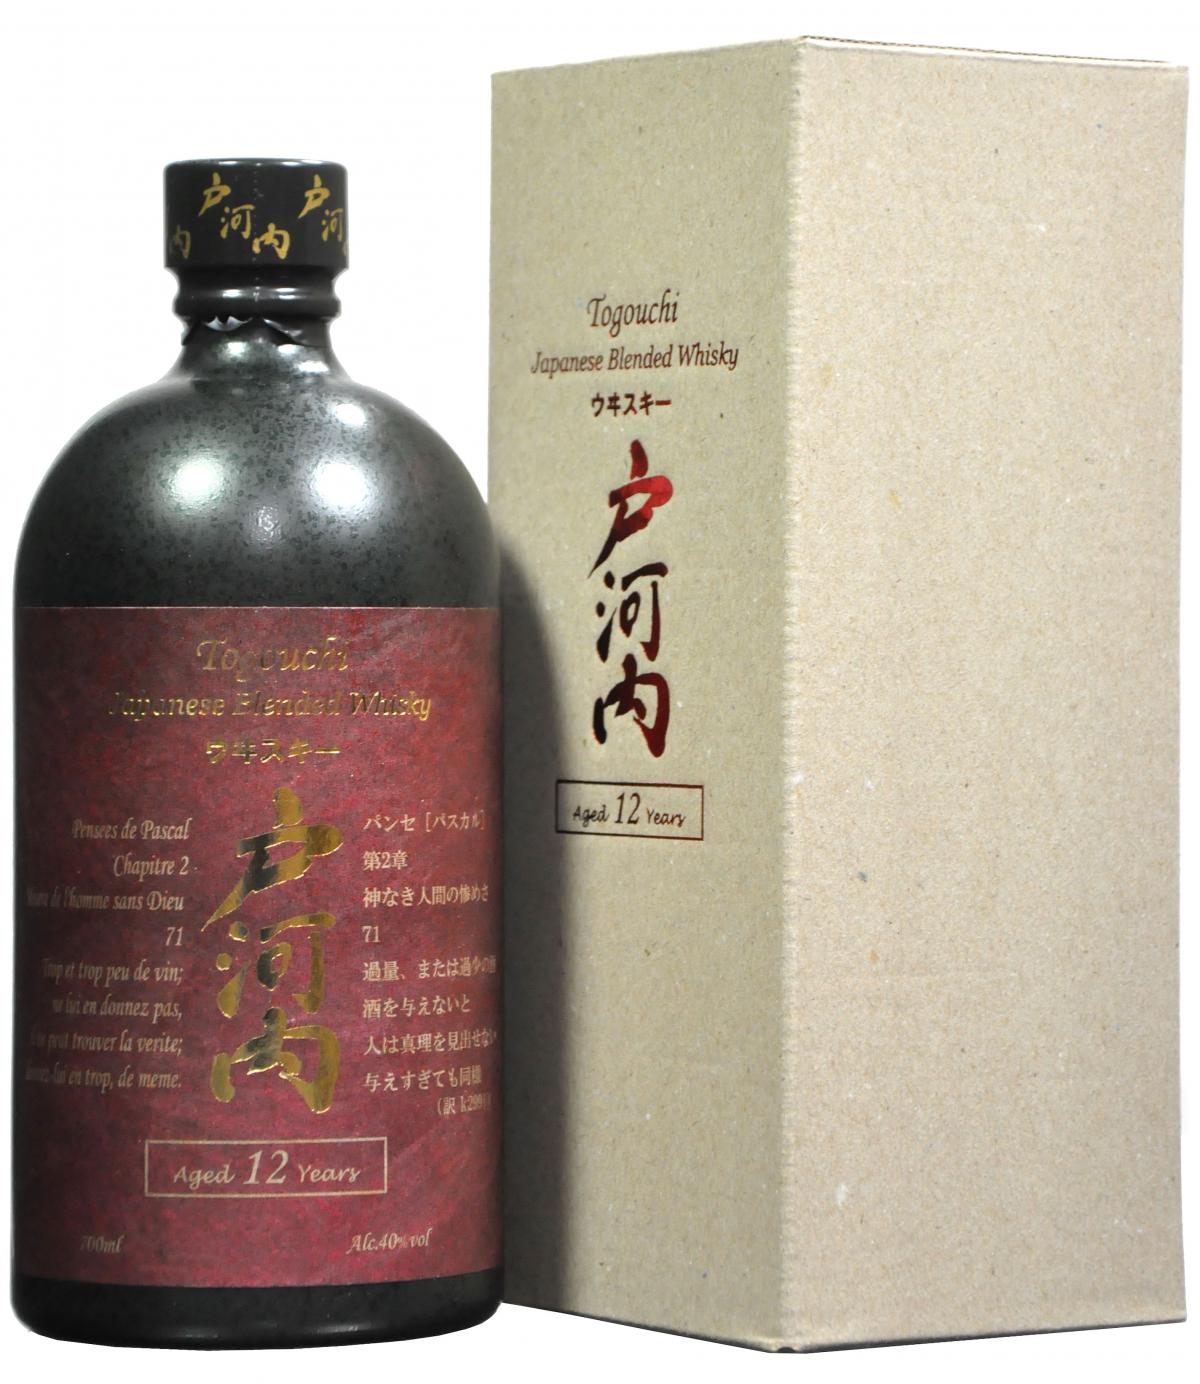 togouchi 12 year old, japanese blended whisky,